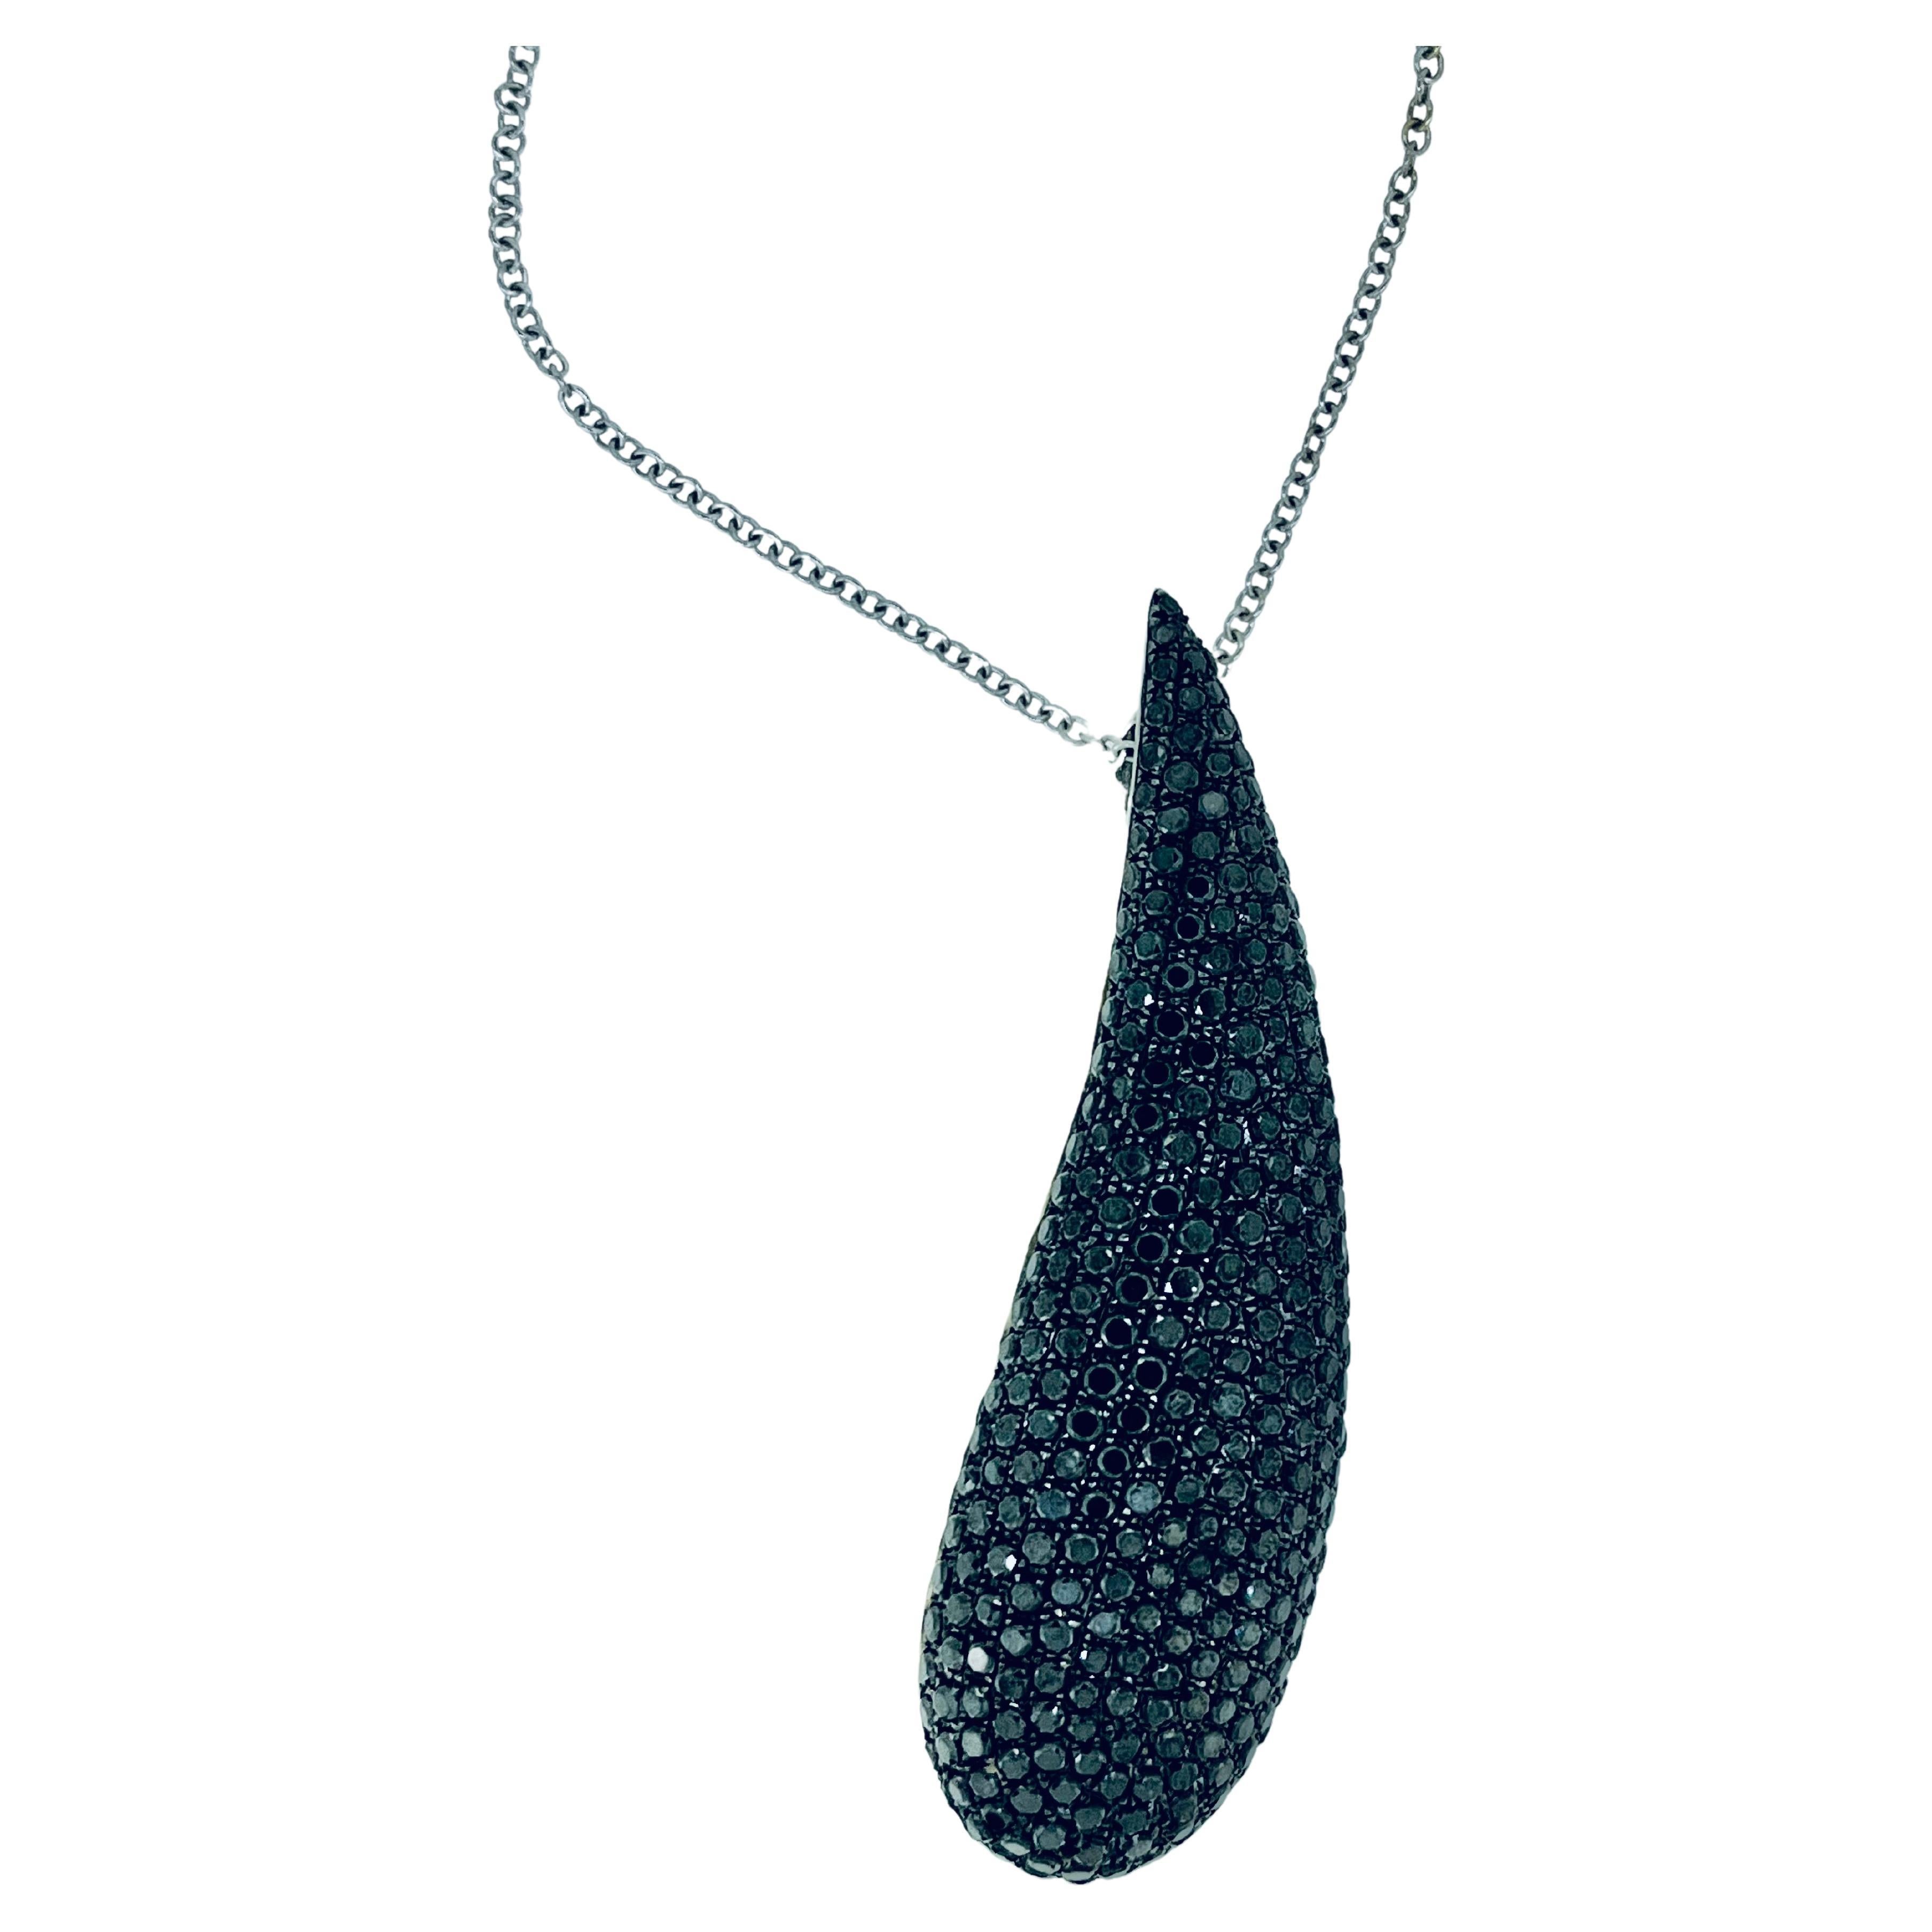 3ct Black Diamonds Tear Drop Shape Pendant with 18ct White Gold Trace Chain For Sale